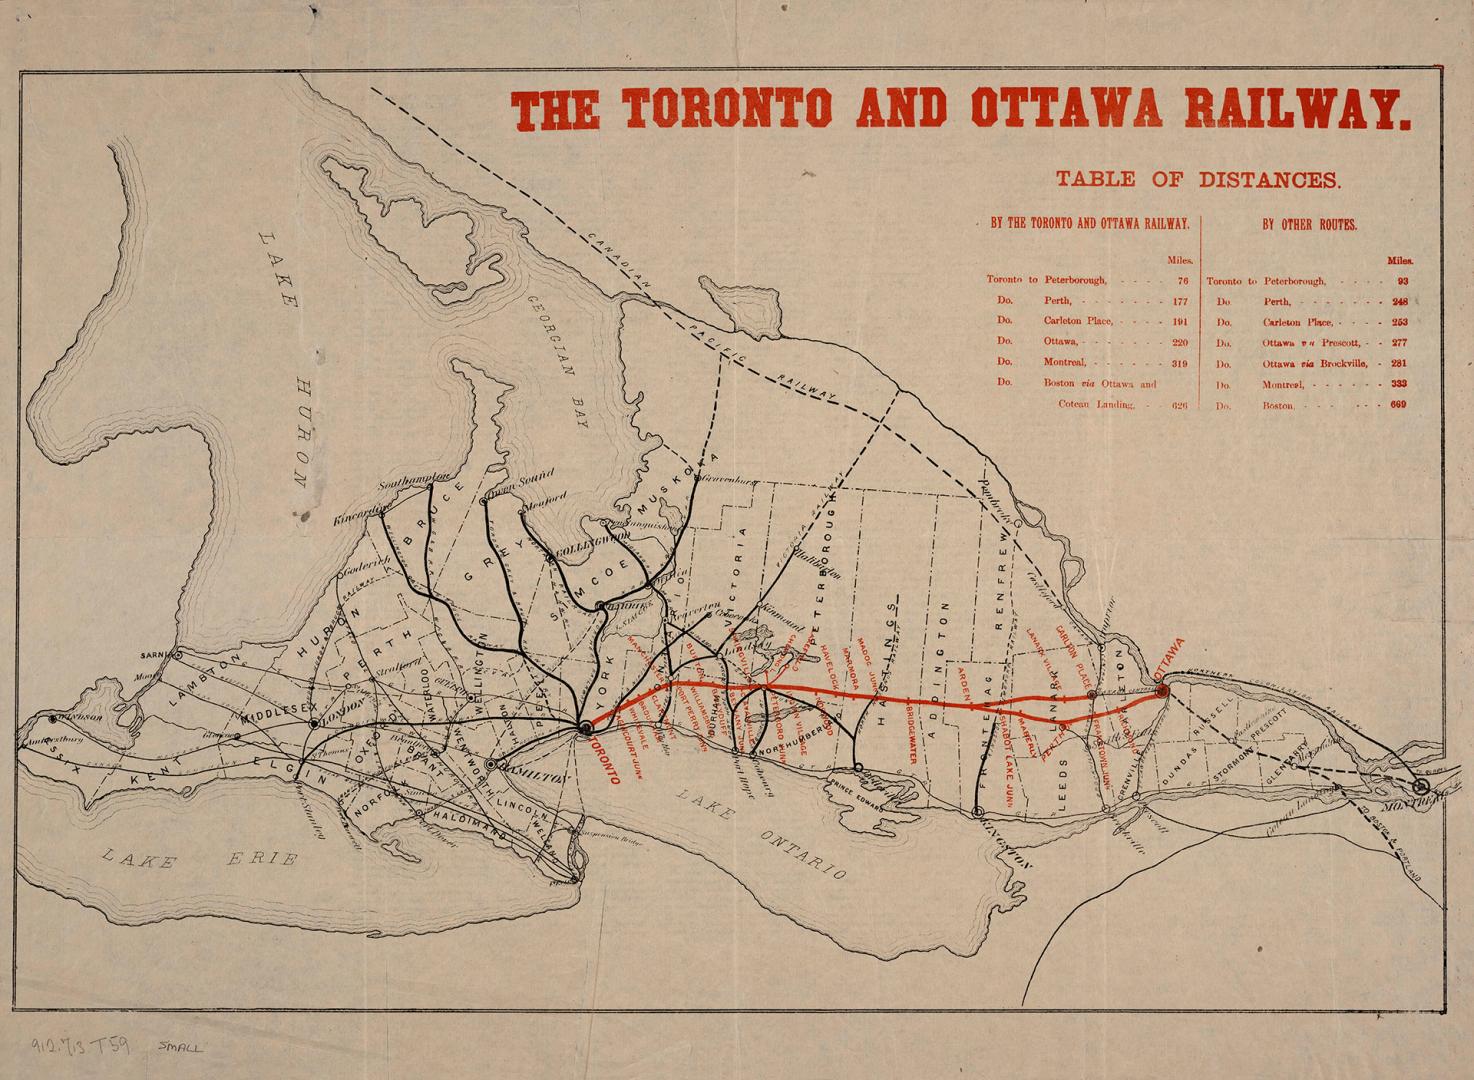 The Toronto and Ottawa Railway